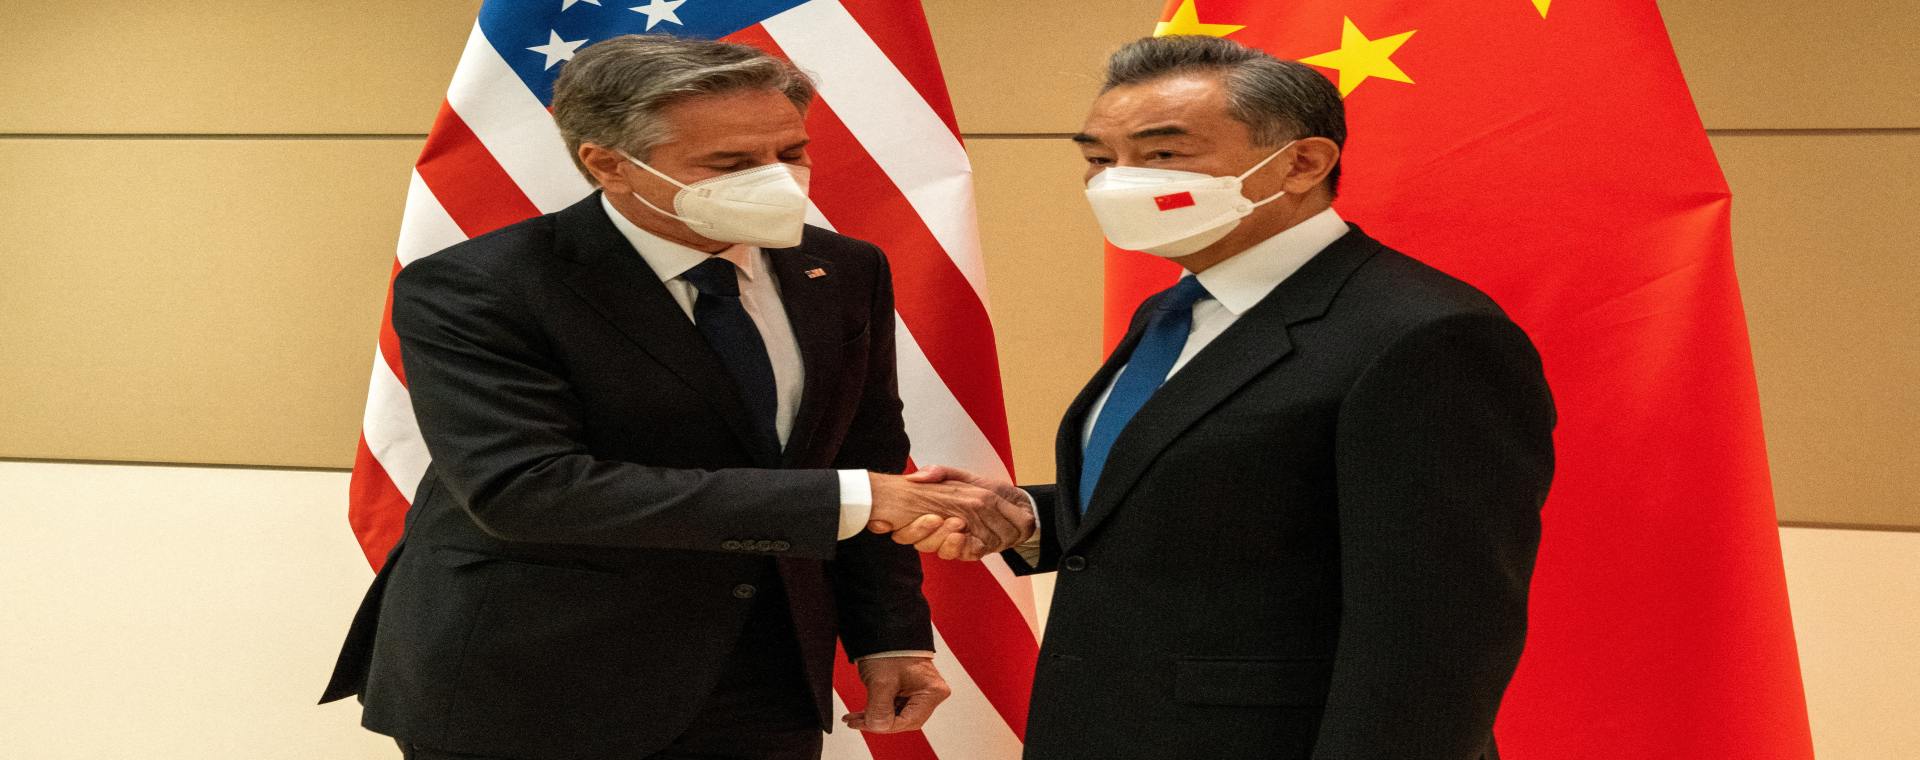 Menteri Luar Negeri Amerika Serikat (AS) Antony Blinken bertemu dengan Penasihat Negara China dan Menteri Luar Negeri Wang Yi selama Sidang Umum PBB ke-77 di Manhattan, New York City, AS, 23 September 2022. - Reuters